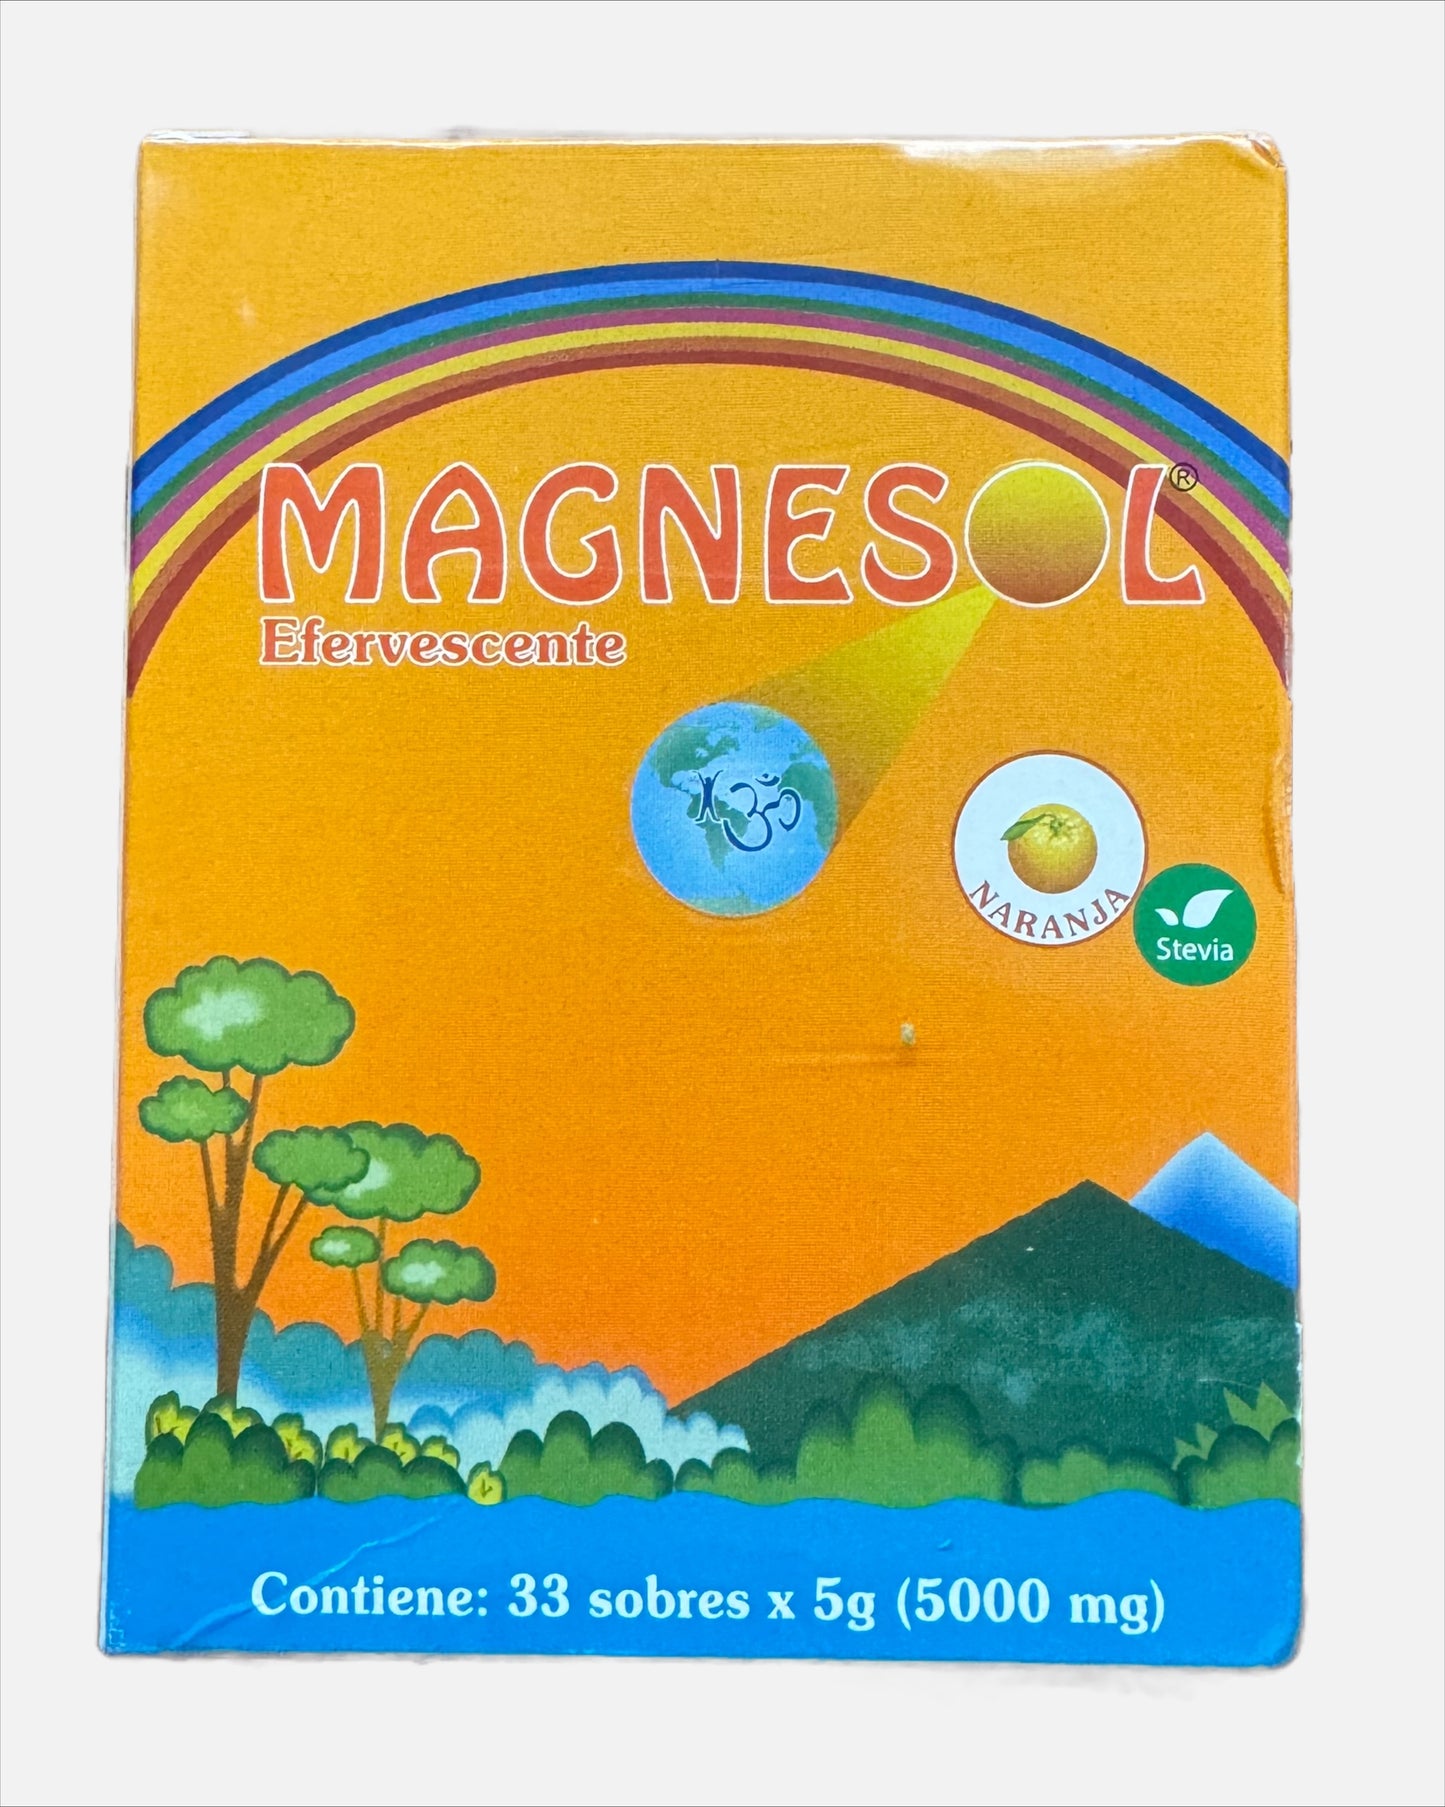 Magnesol Naranja, 33 Count Magnesium 5g Orange